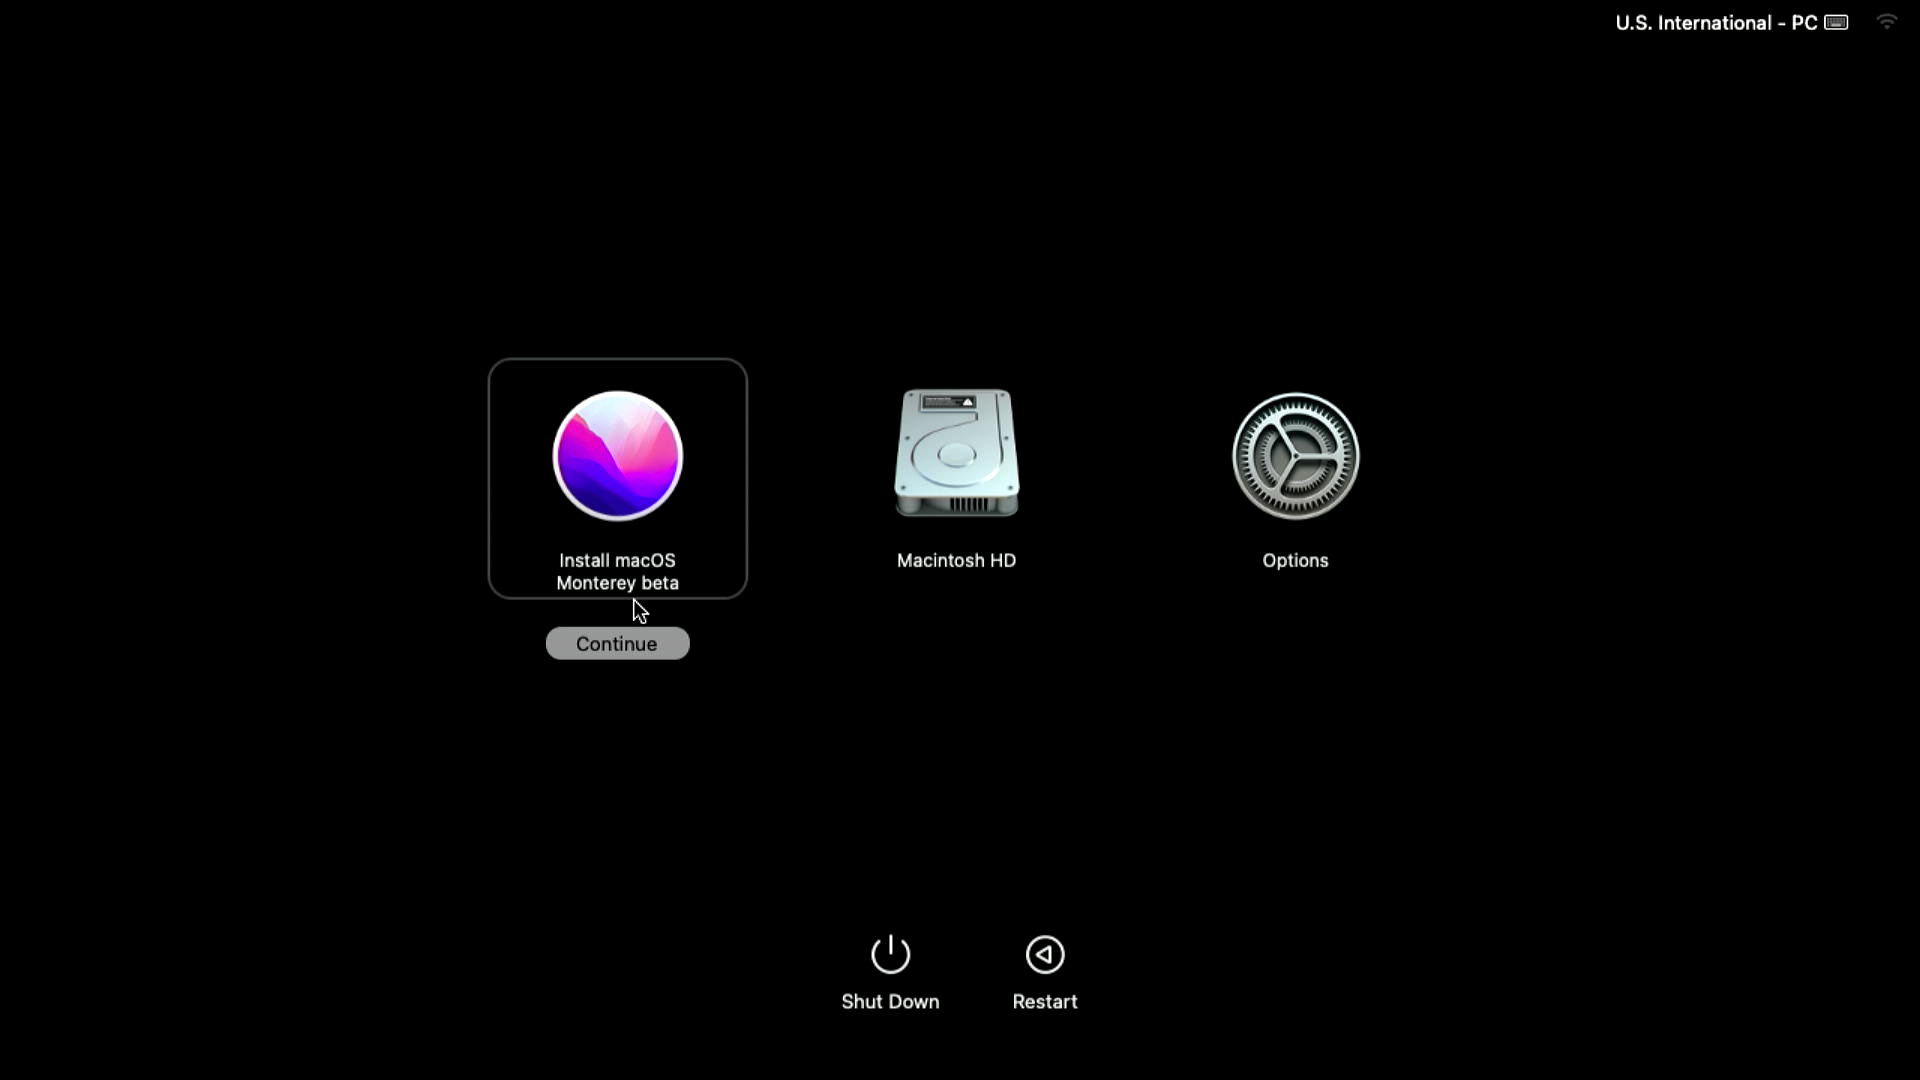 Select Install macOS Monterey beta